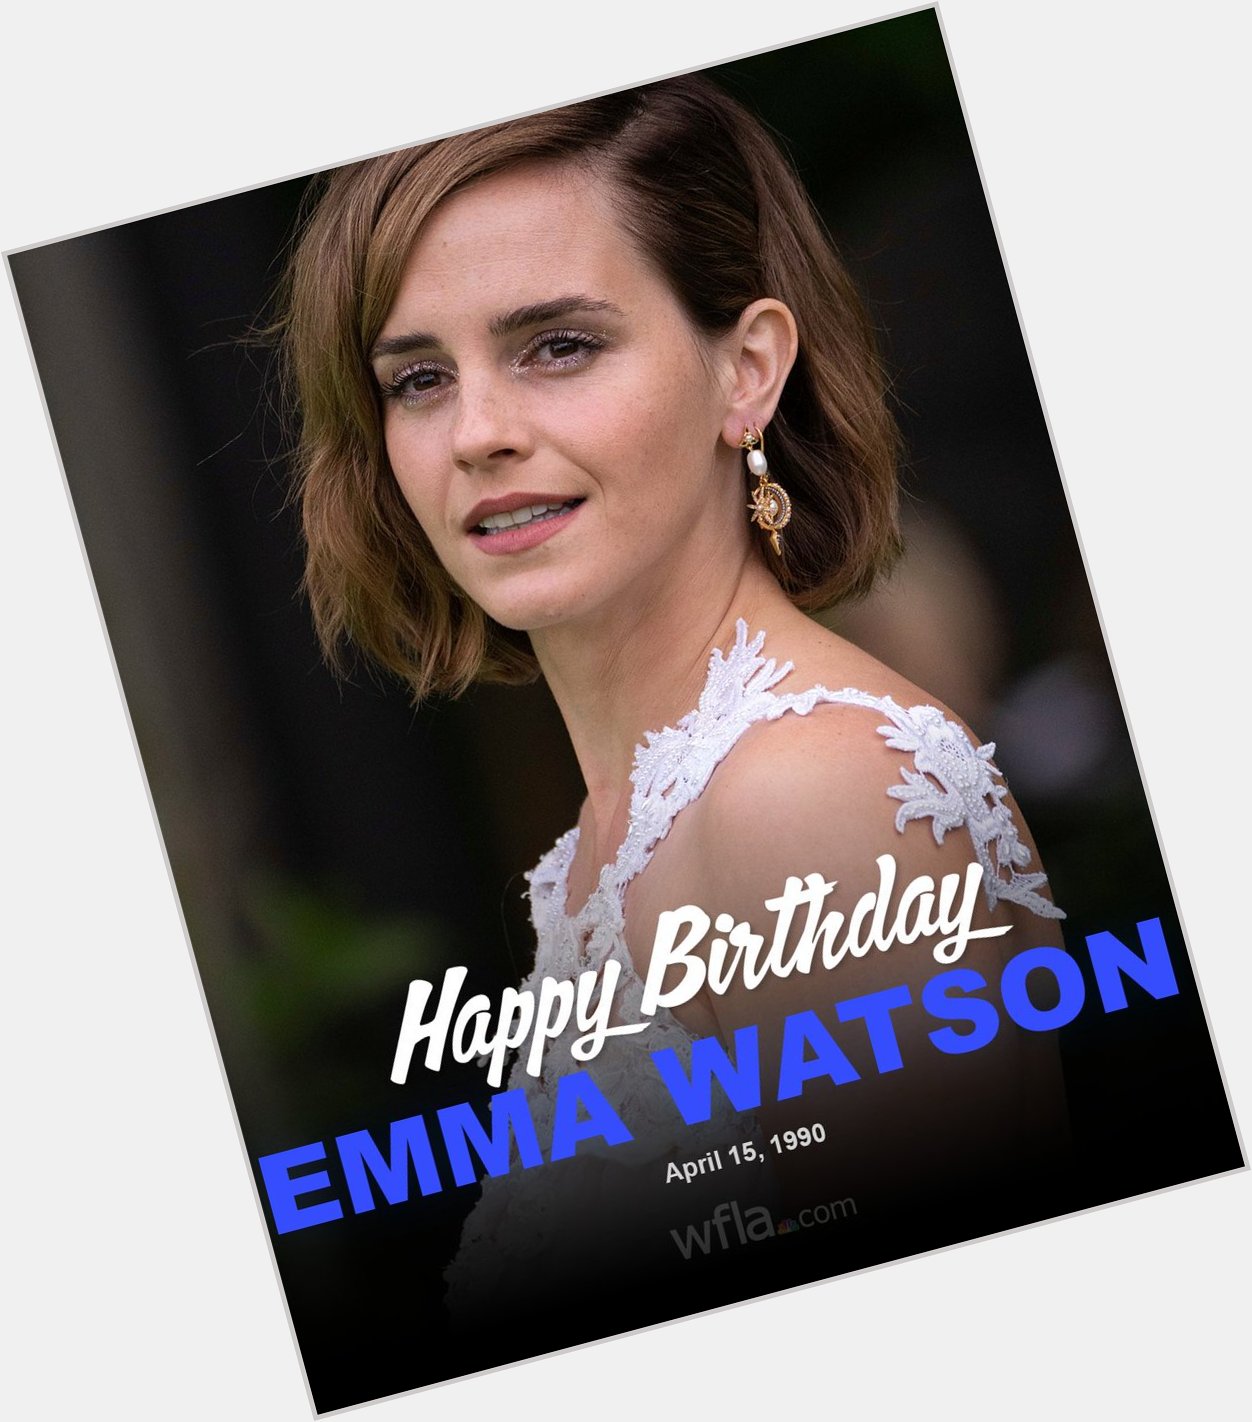 HAPPY BIRTHDAY, EMMA WATSON The Harry Potter star turns 33 today!  